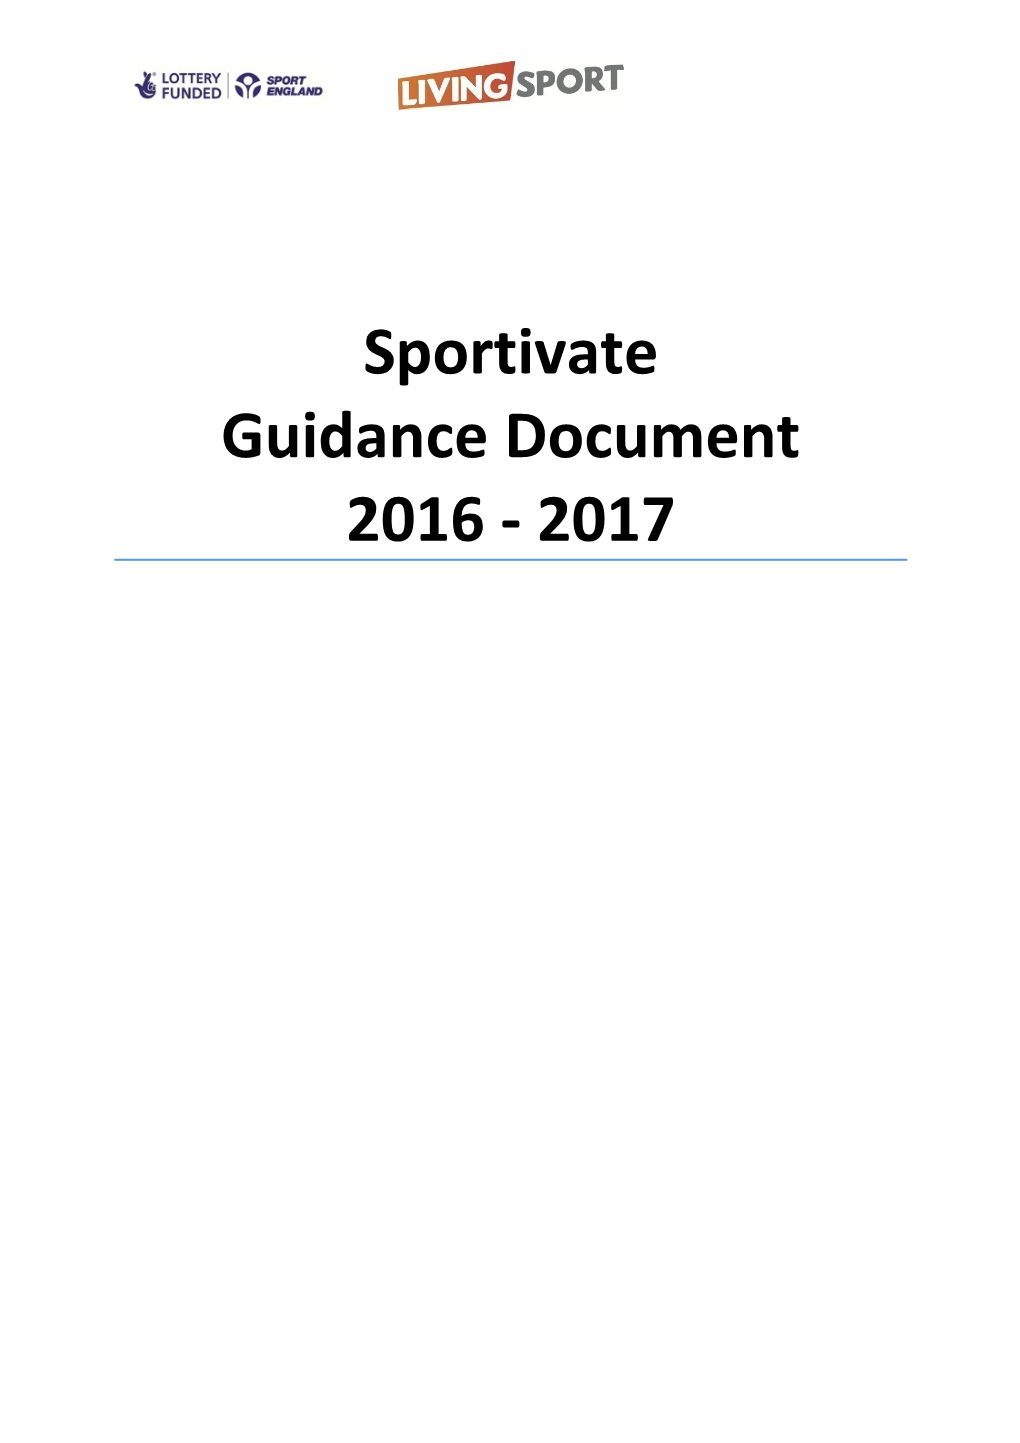 Sportivate Guidance Document 2016 - 2017